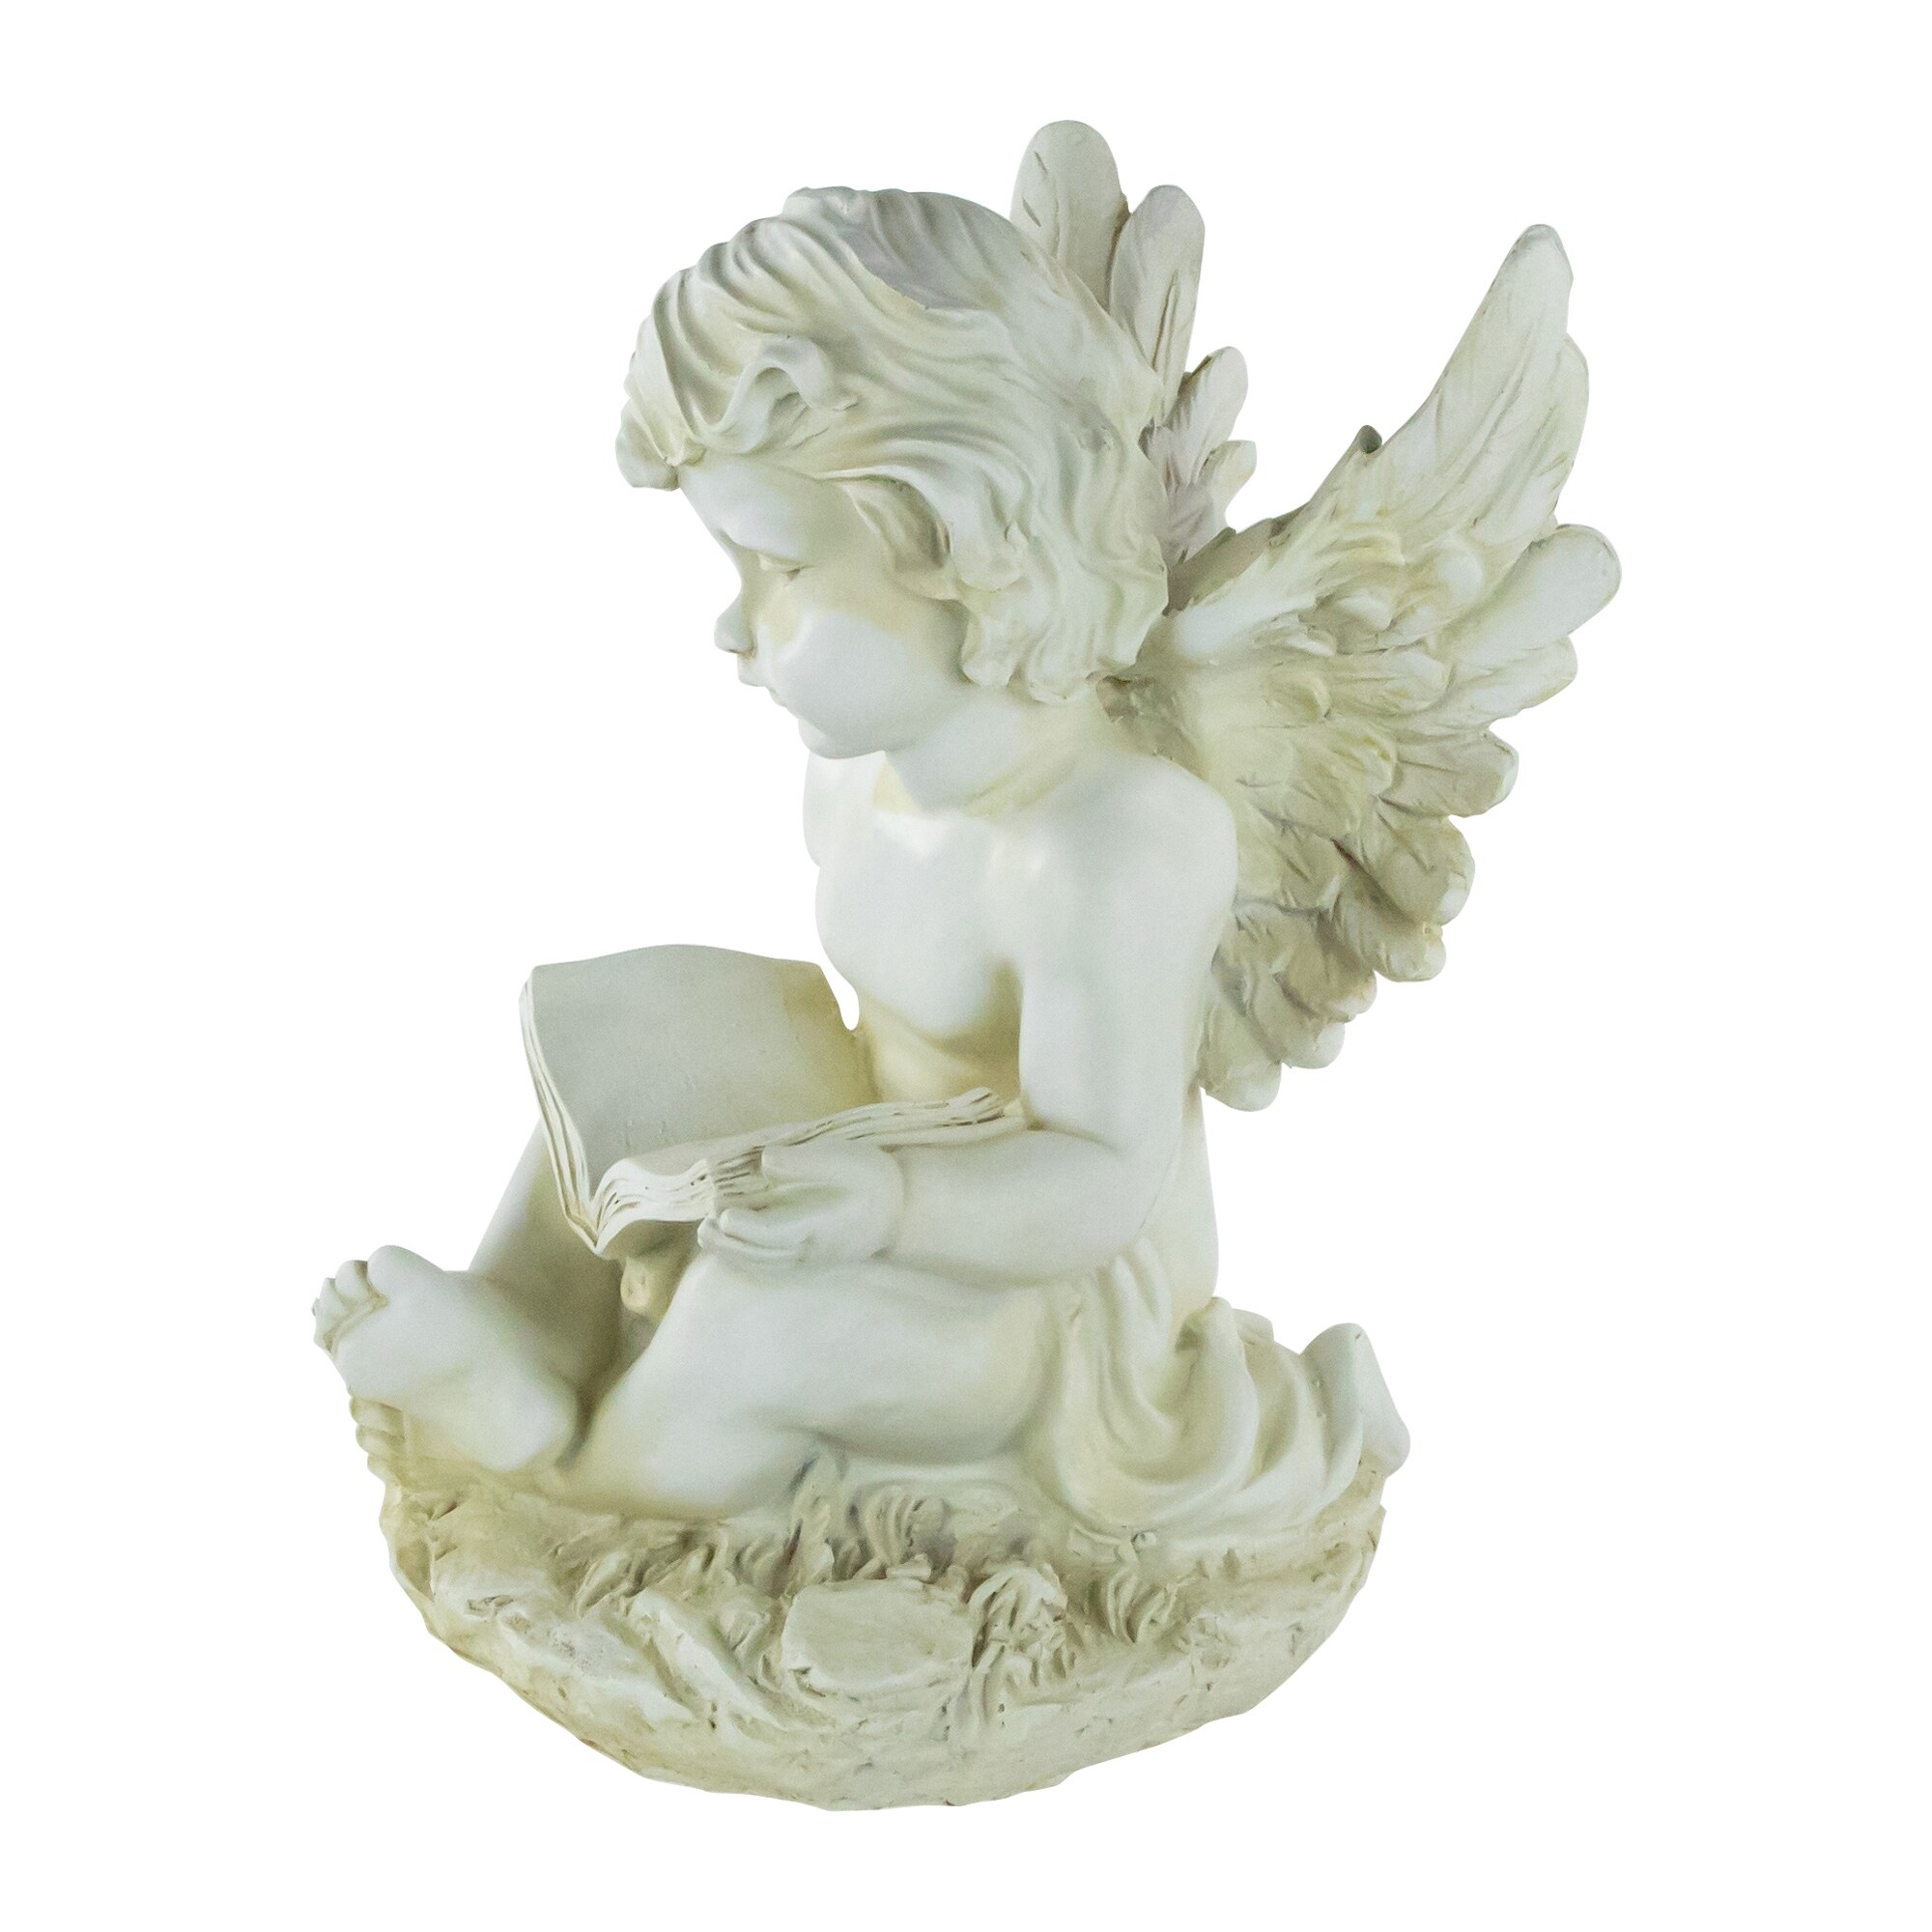 11.5" Ivory Sitting Cherub Angel with Book Outdoor Patio Garden Statue - image 3 of 4